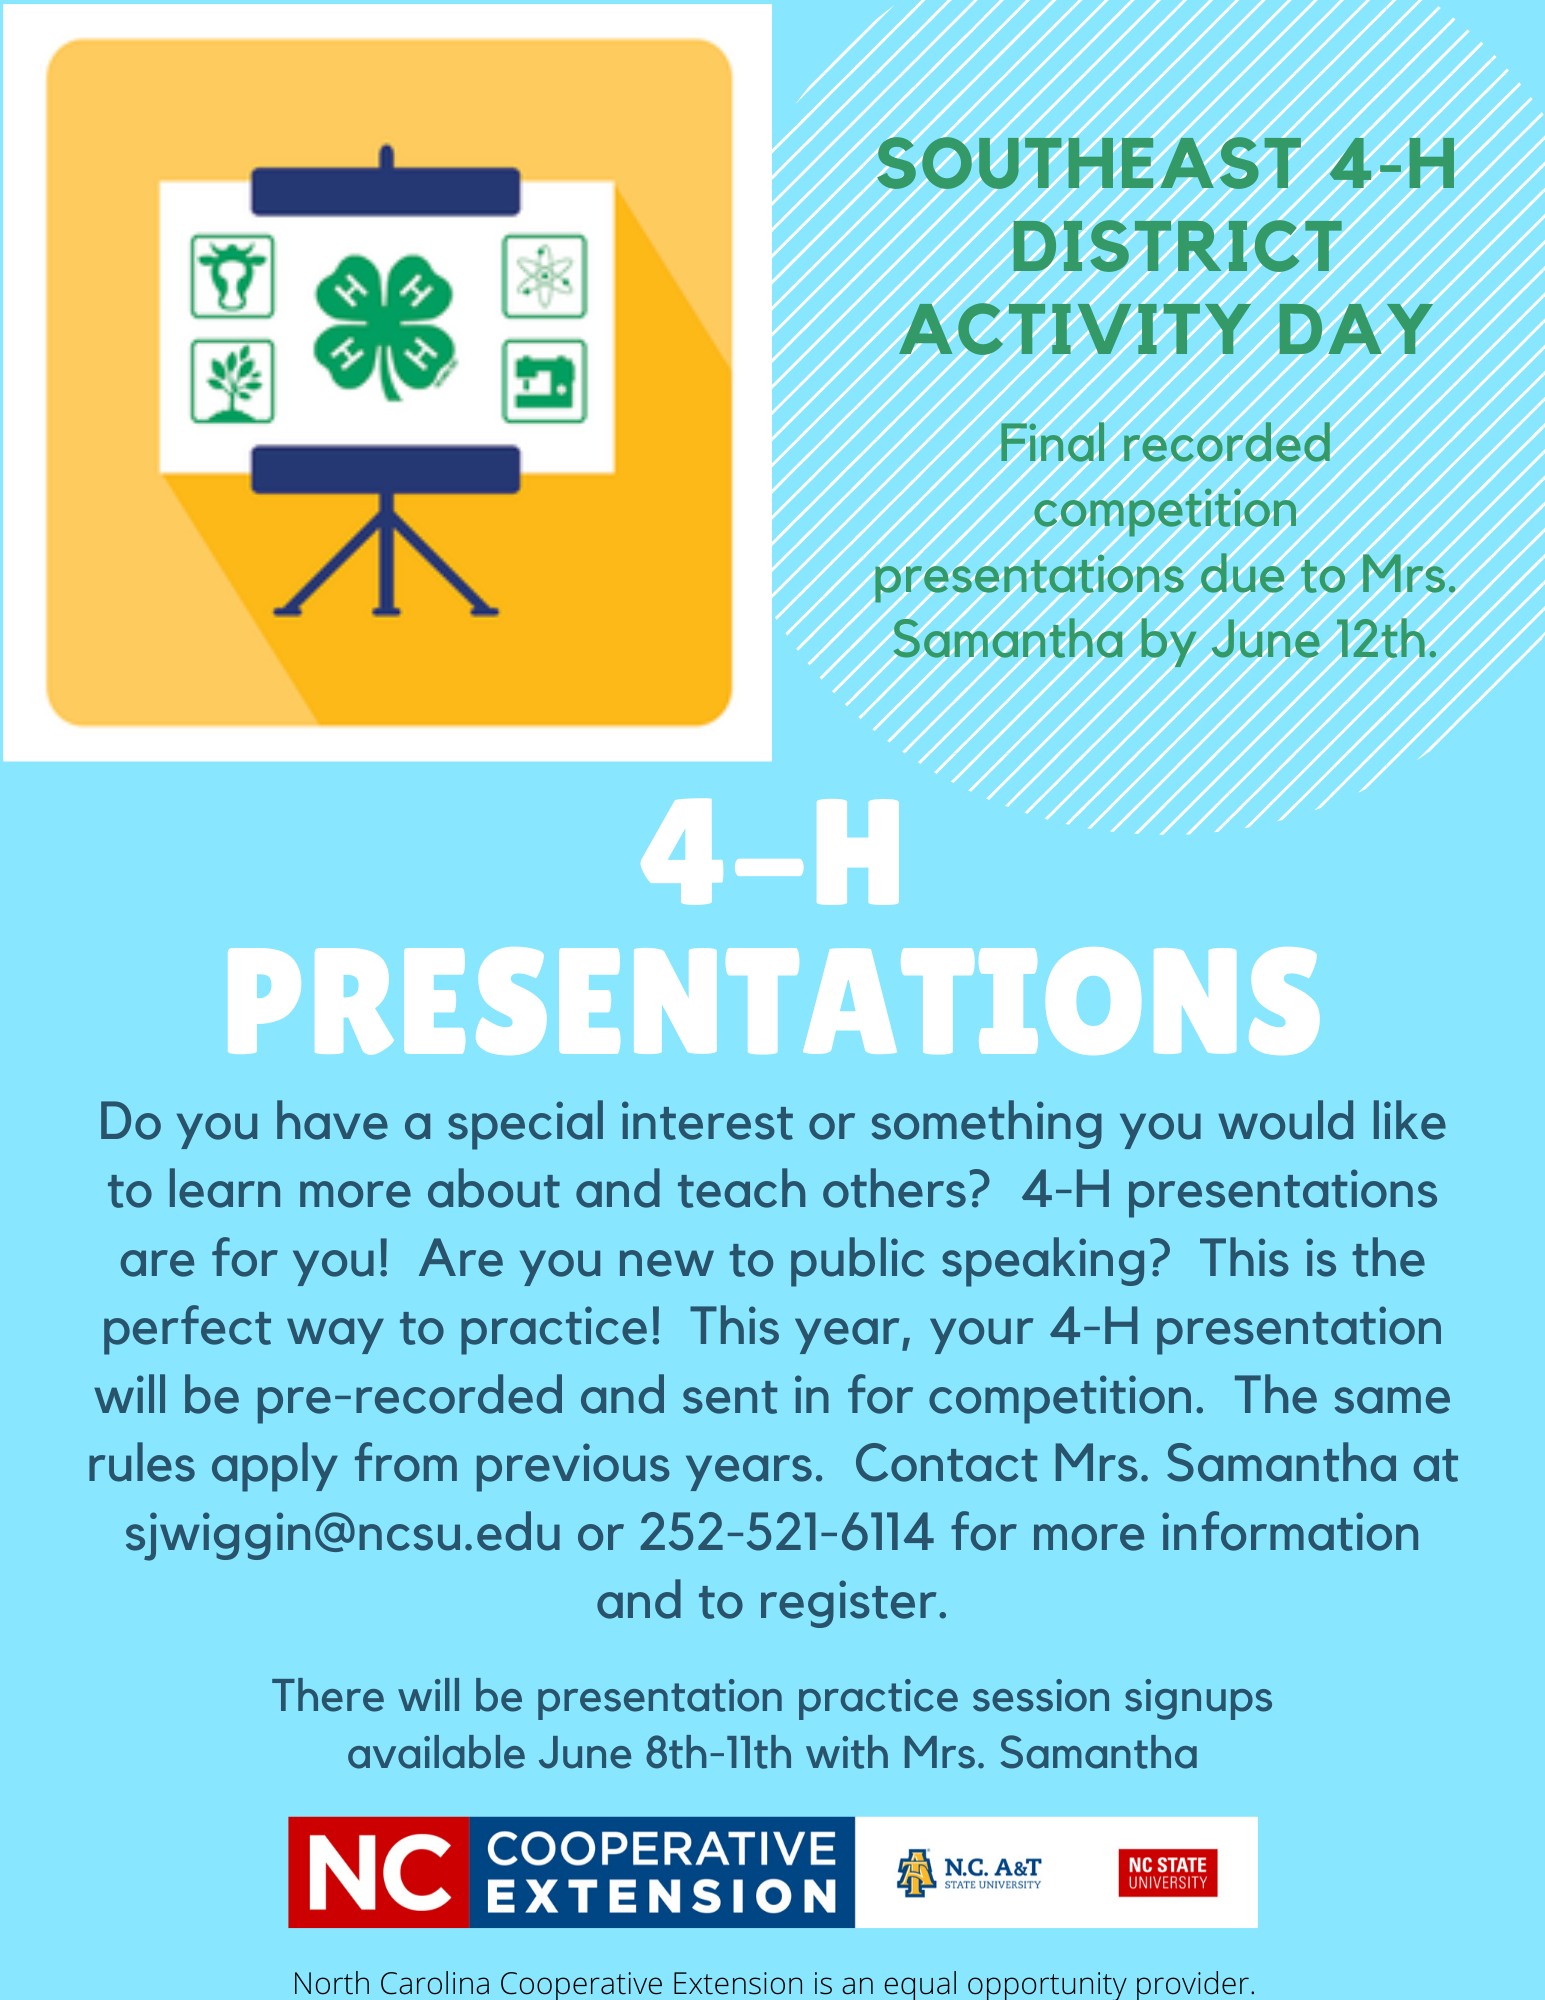 4-H Presentations